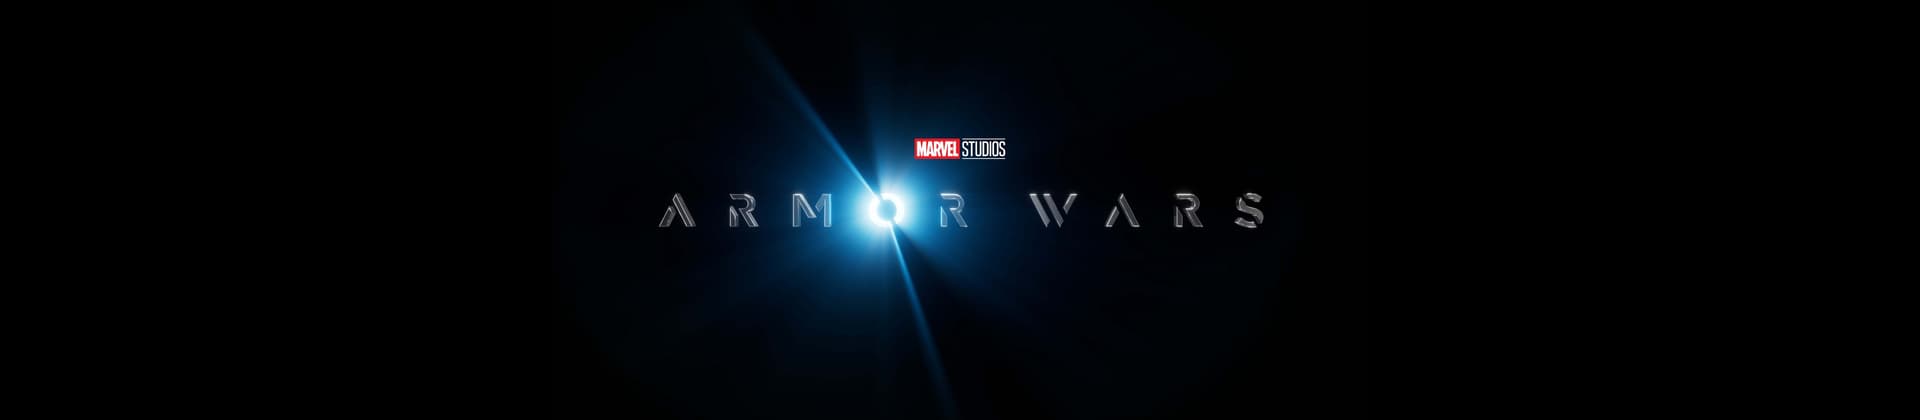 Marvel Studios' Armor Wars Movie Poster Logo on Black